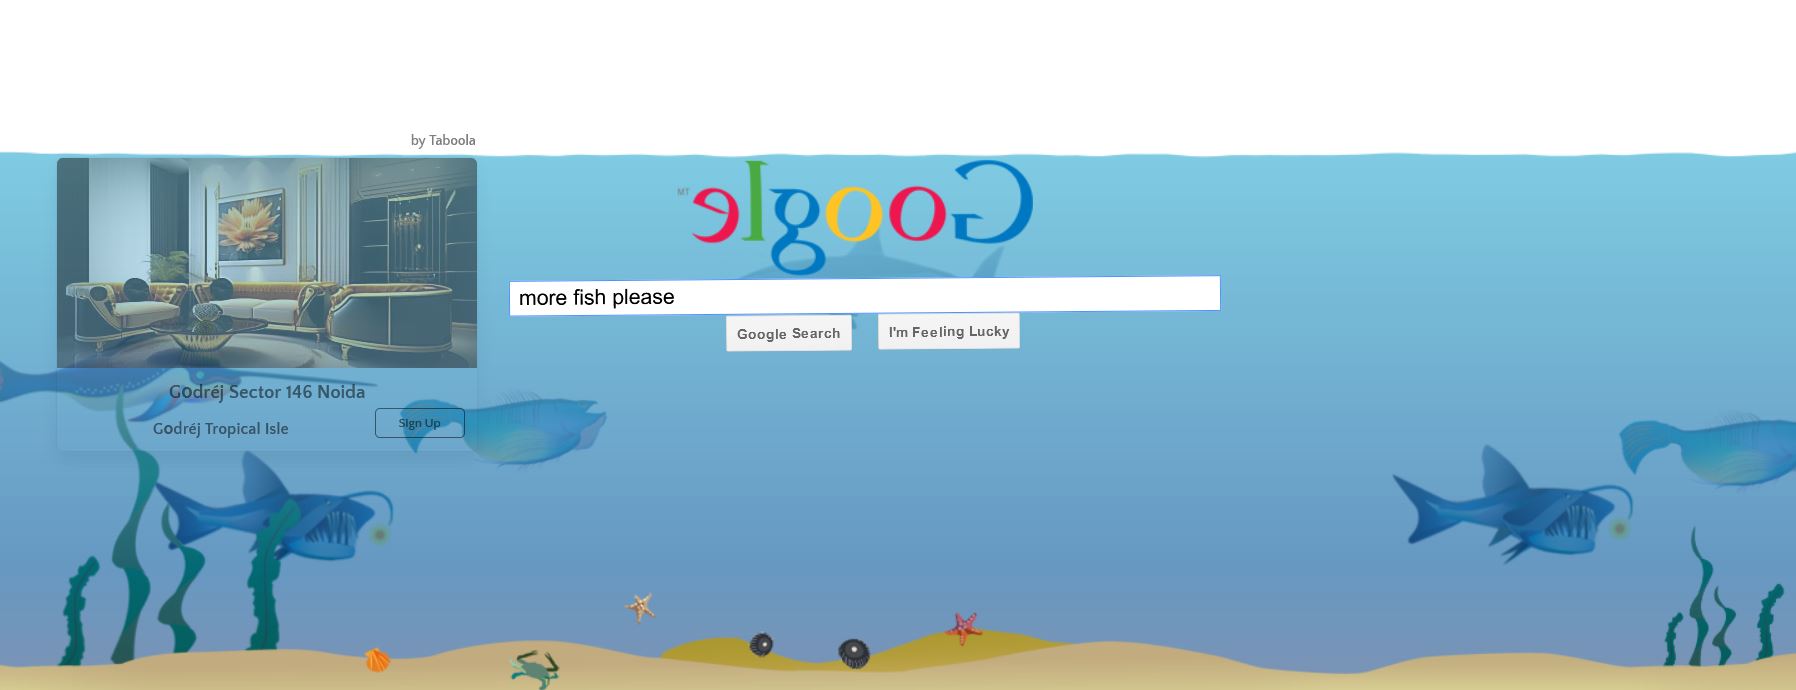 Google Gravity go Underwater